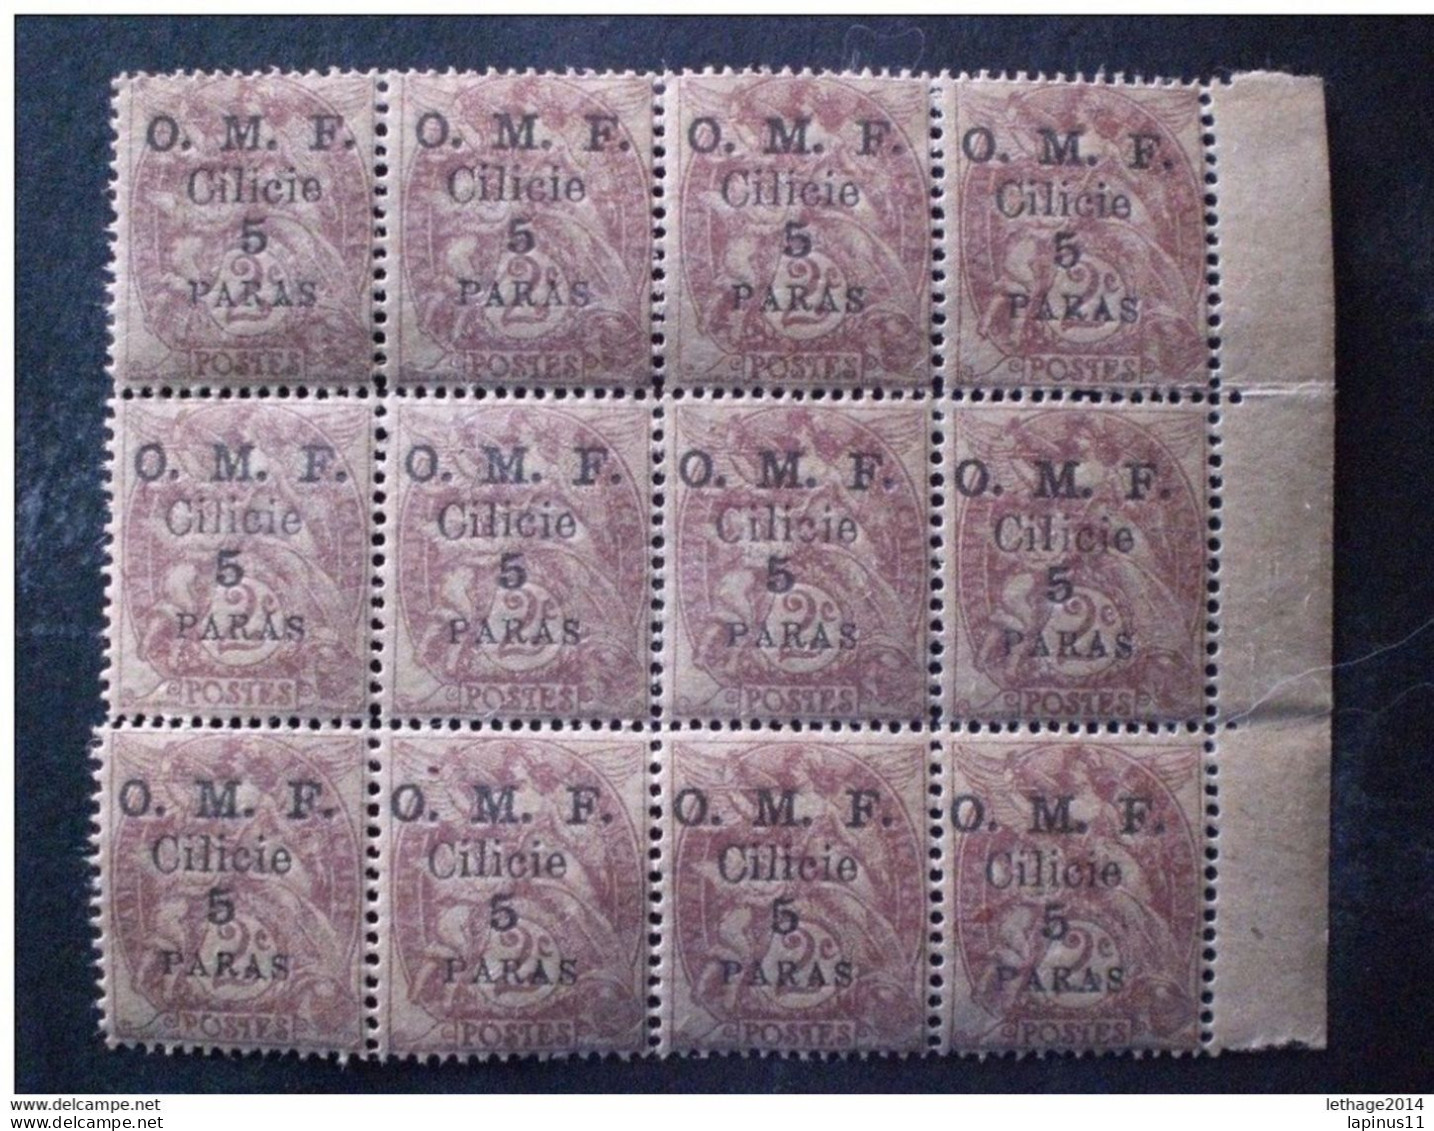 Ottoman Cilicia Rare Stamps O.M.F MNH 12 Stamps 2 Centimes Over Print 5 Paras ERROR!! $$$$ Mnh - Nuovi